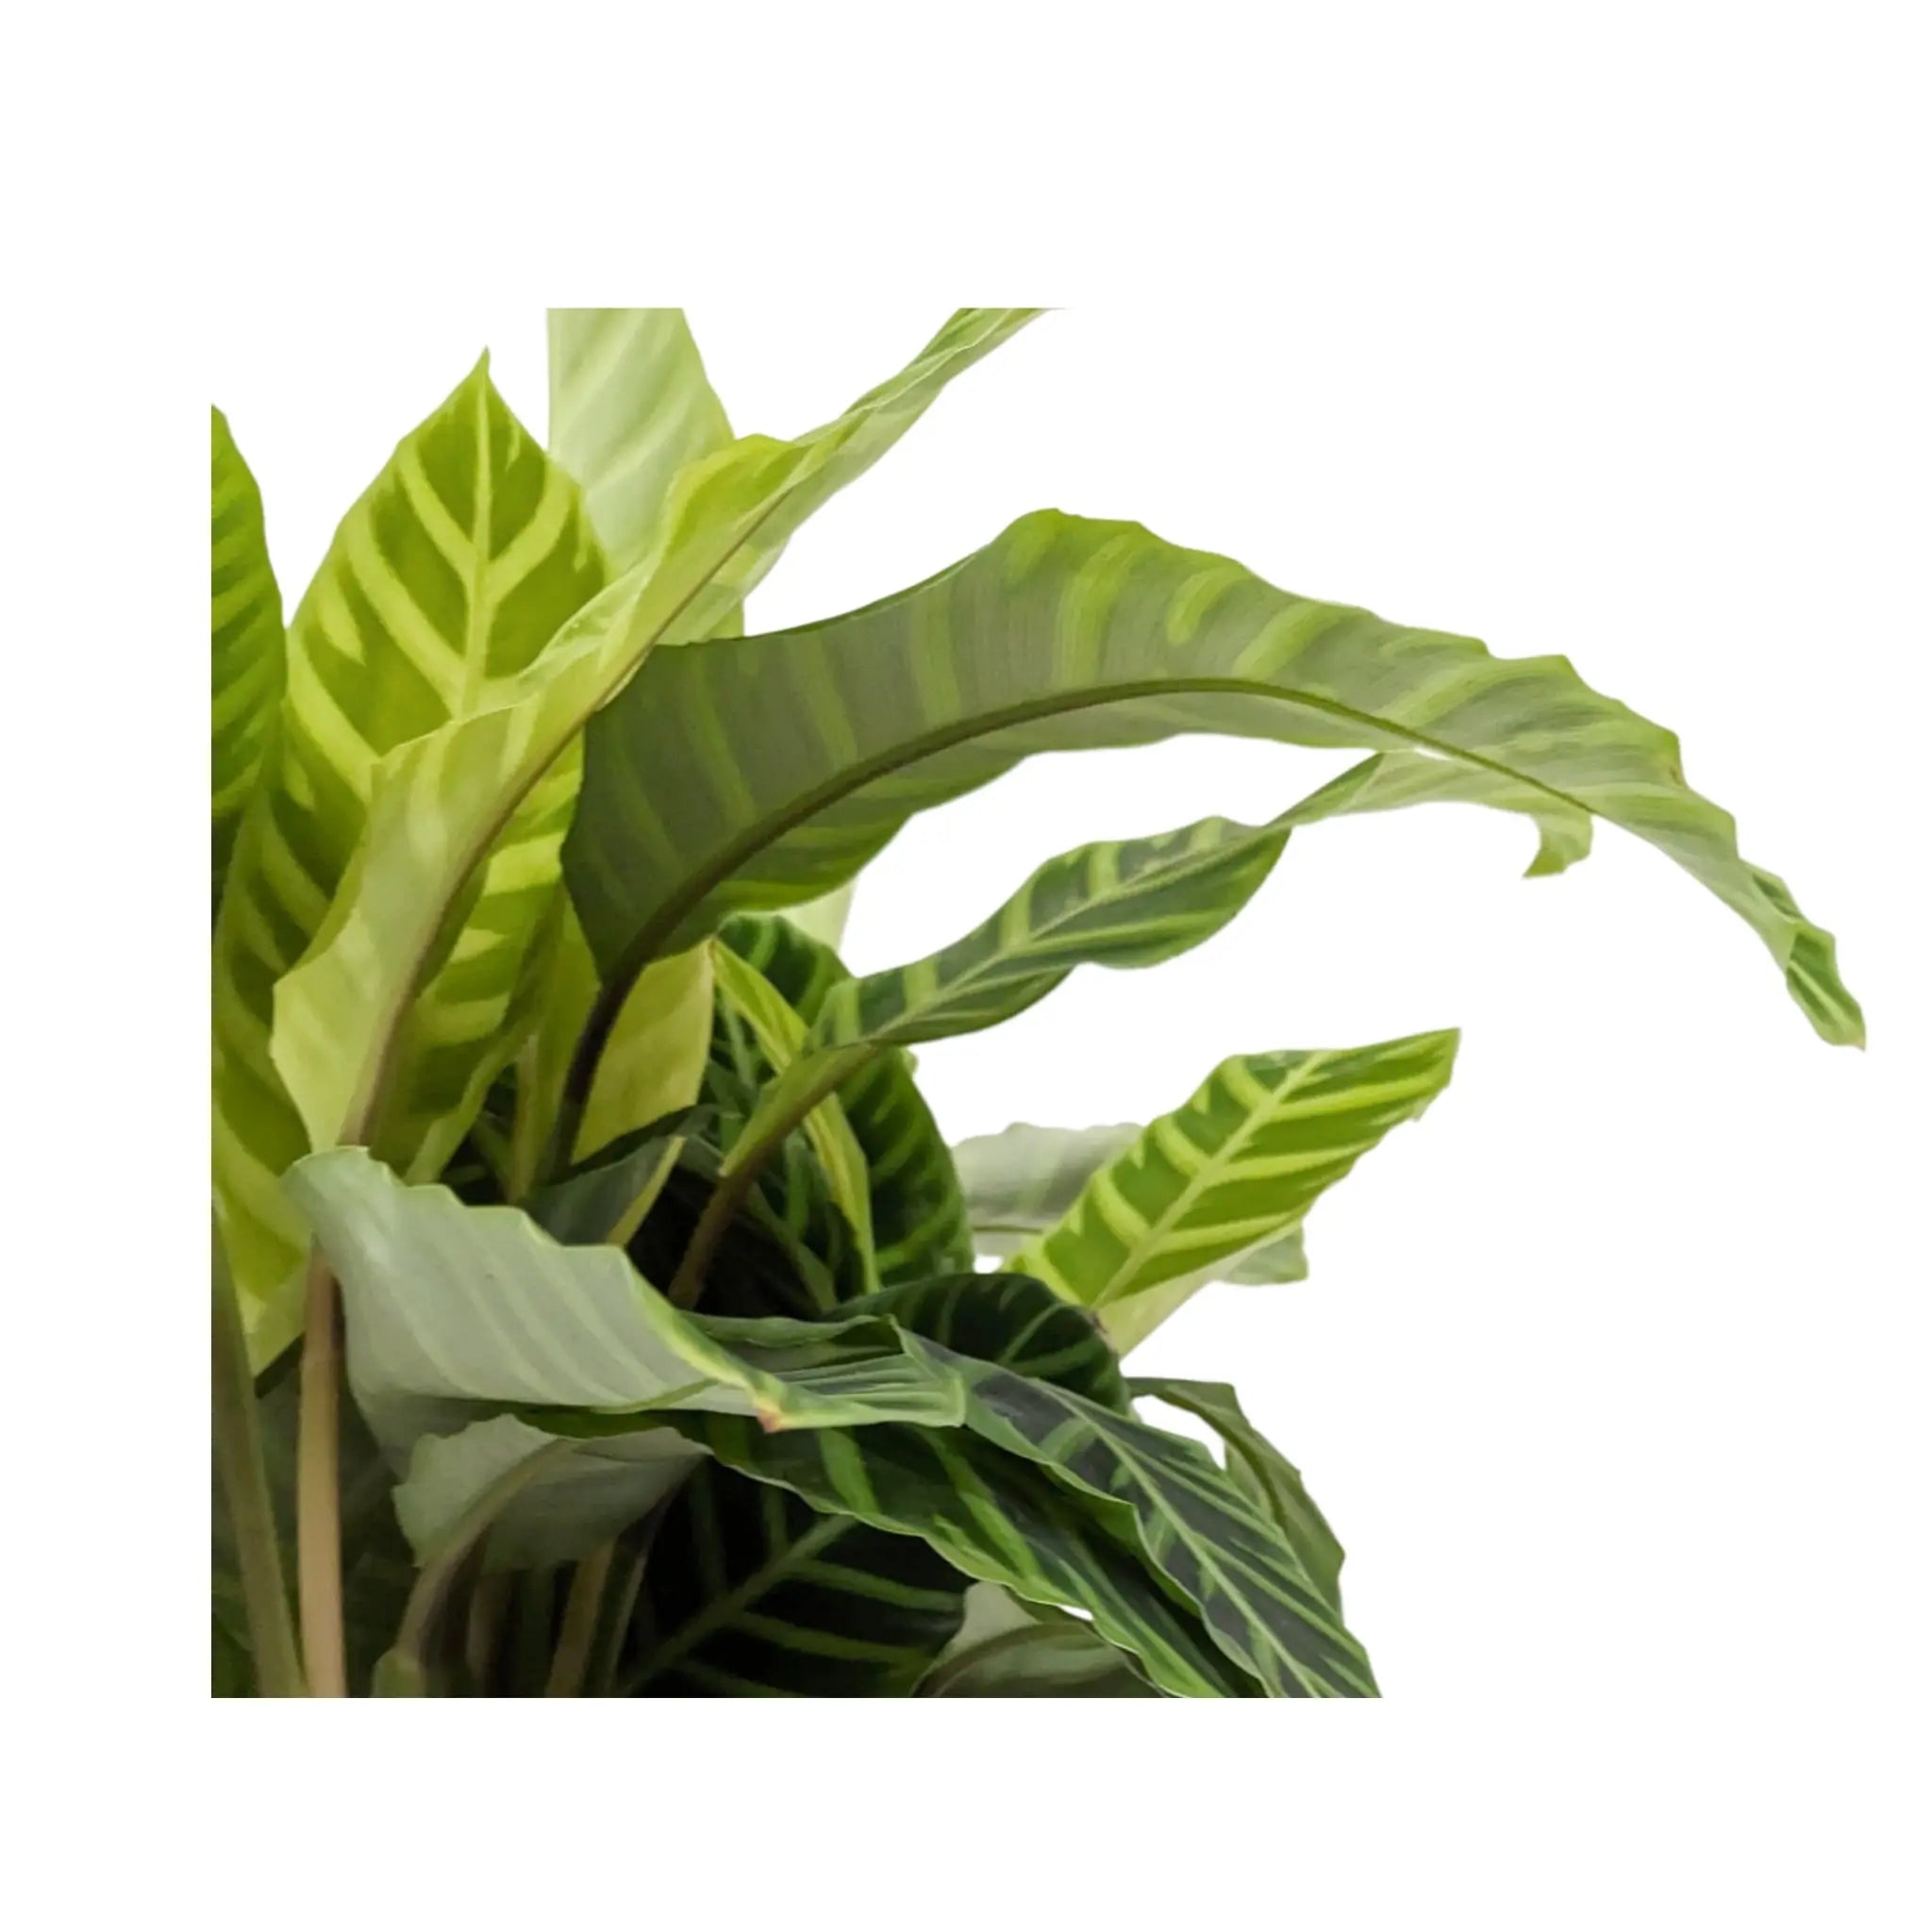 Calathea Zebrina - Zebra Plant Leaf Culture